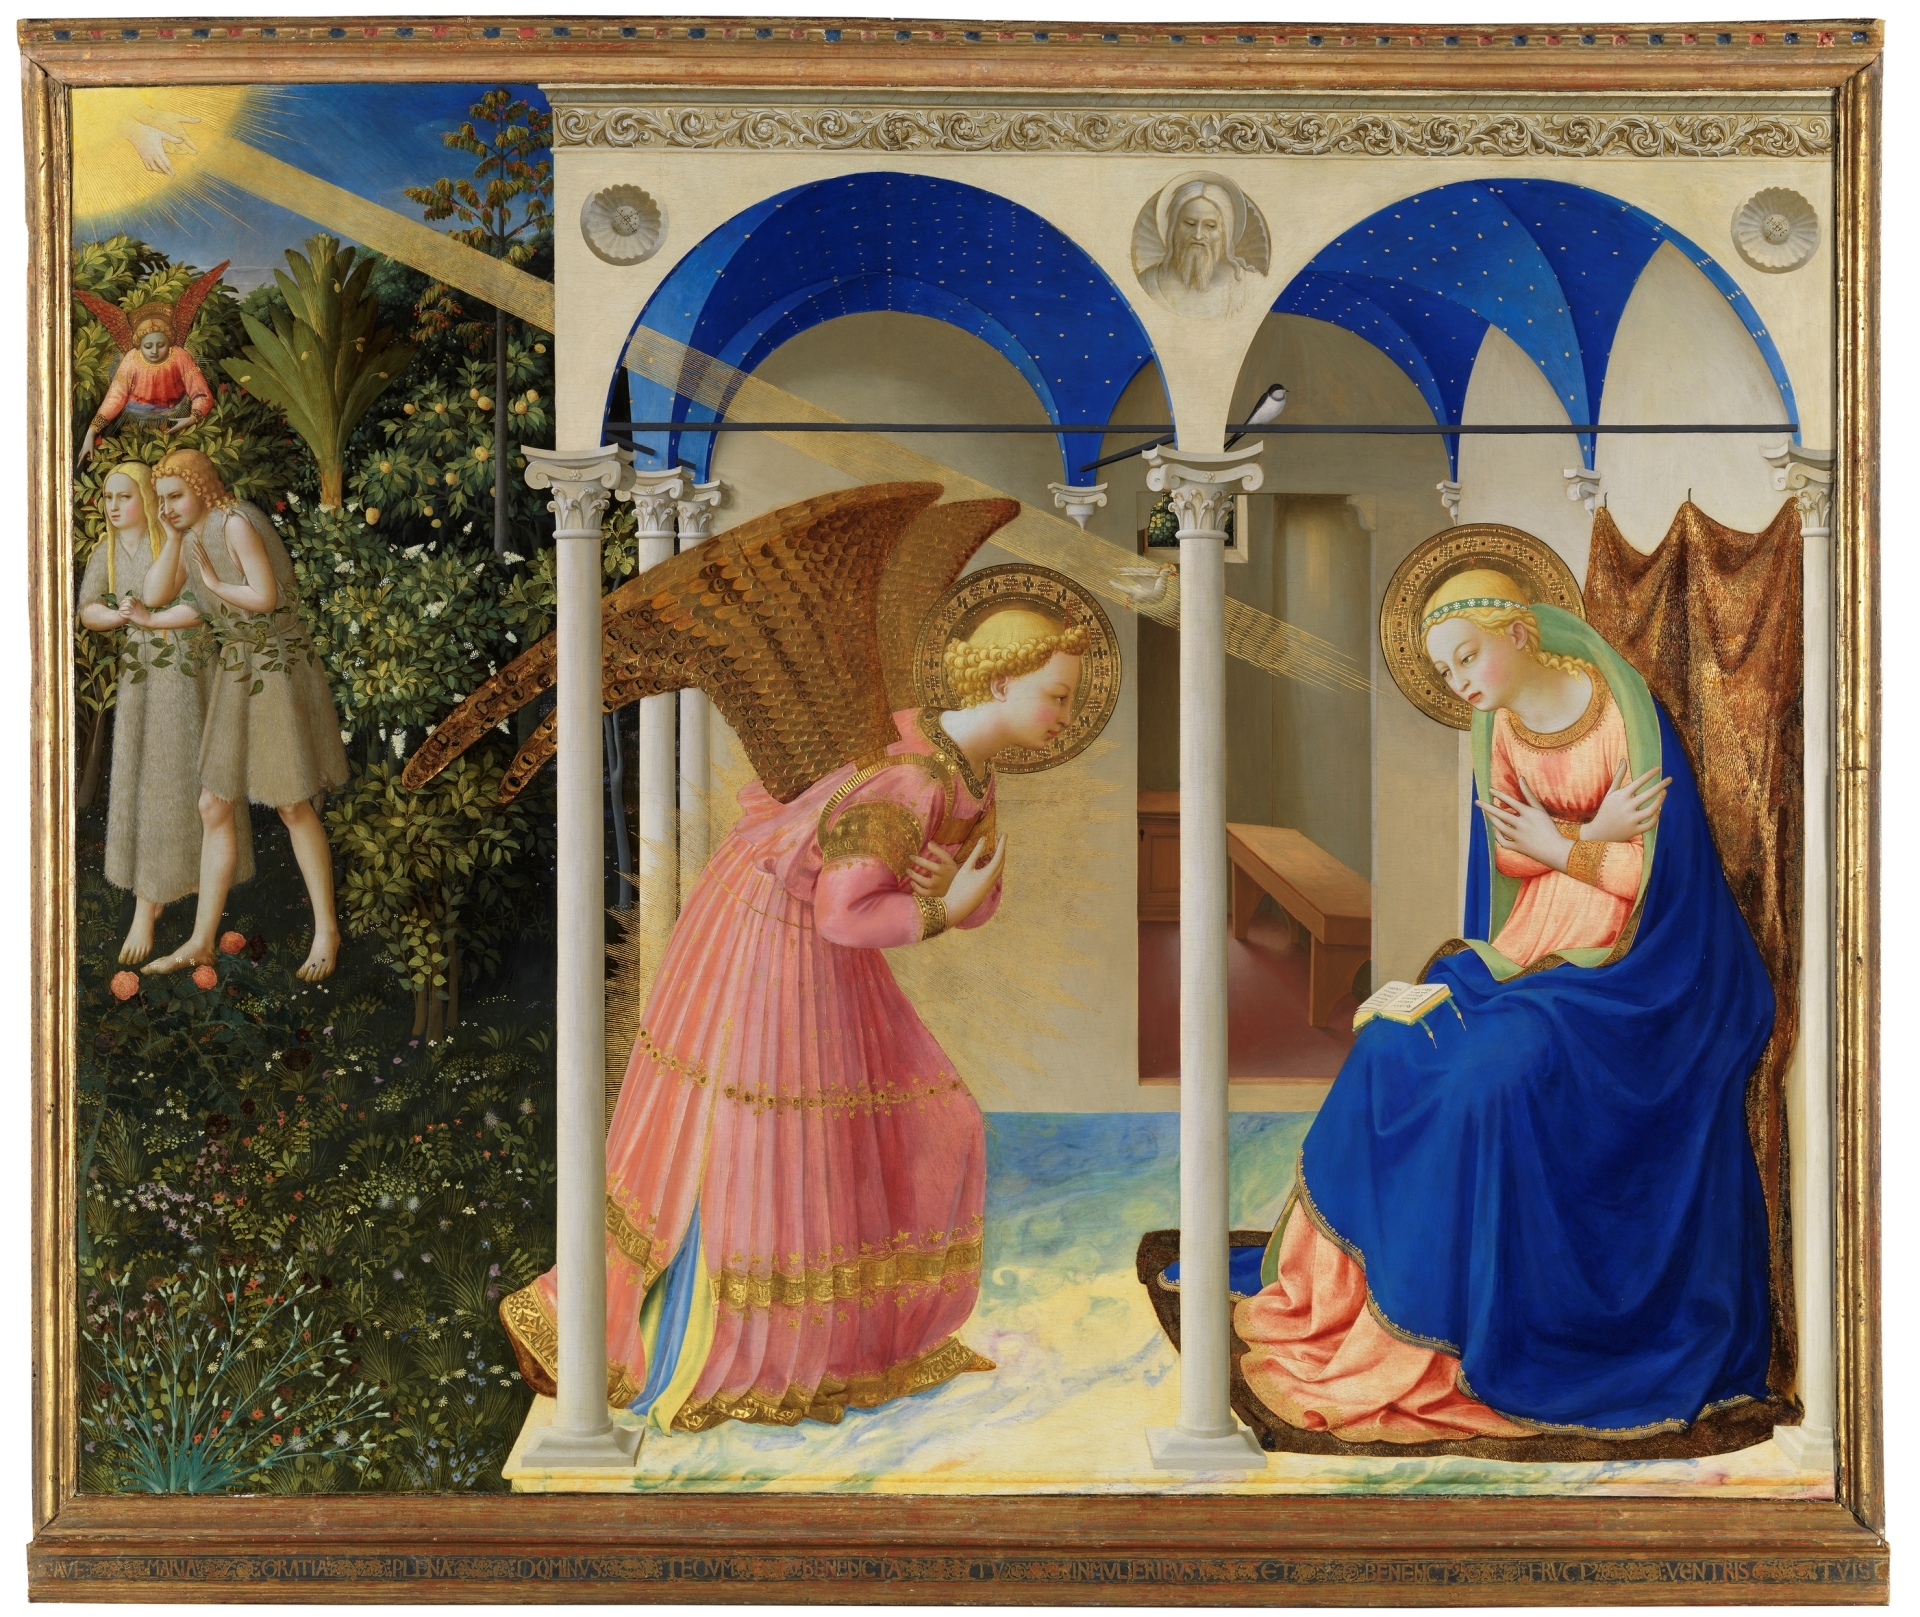 De annunciatie by Fra Angelico - circa 1426 - 162,3 x 191,5 cm 